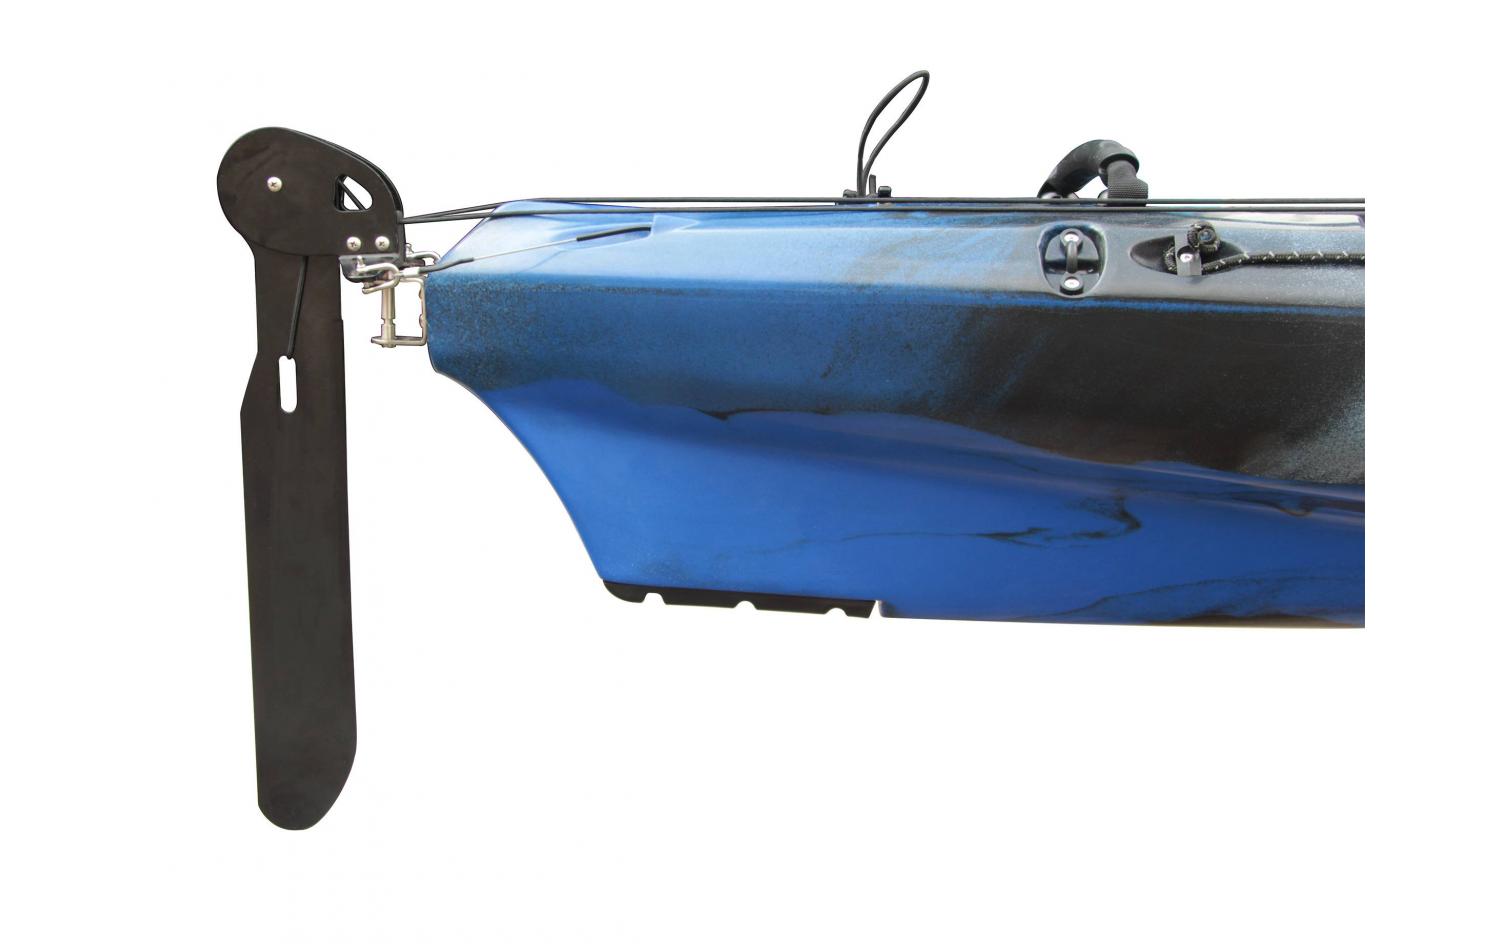 Marlin 438 Fishing Kayak from Galaxy Kayaks